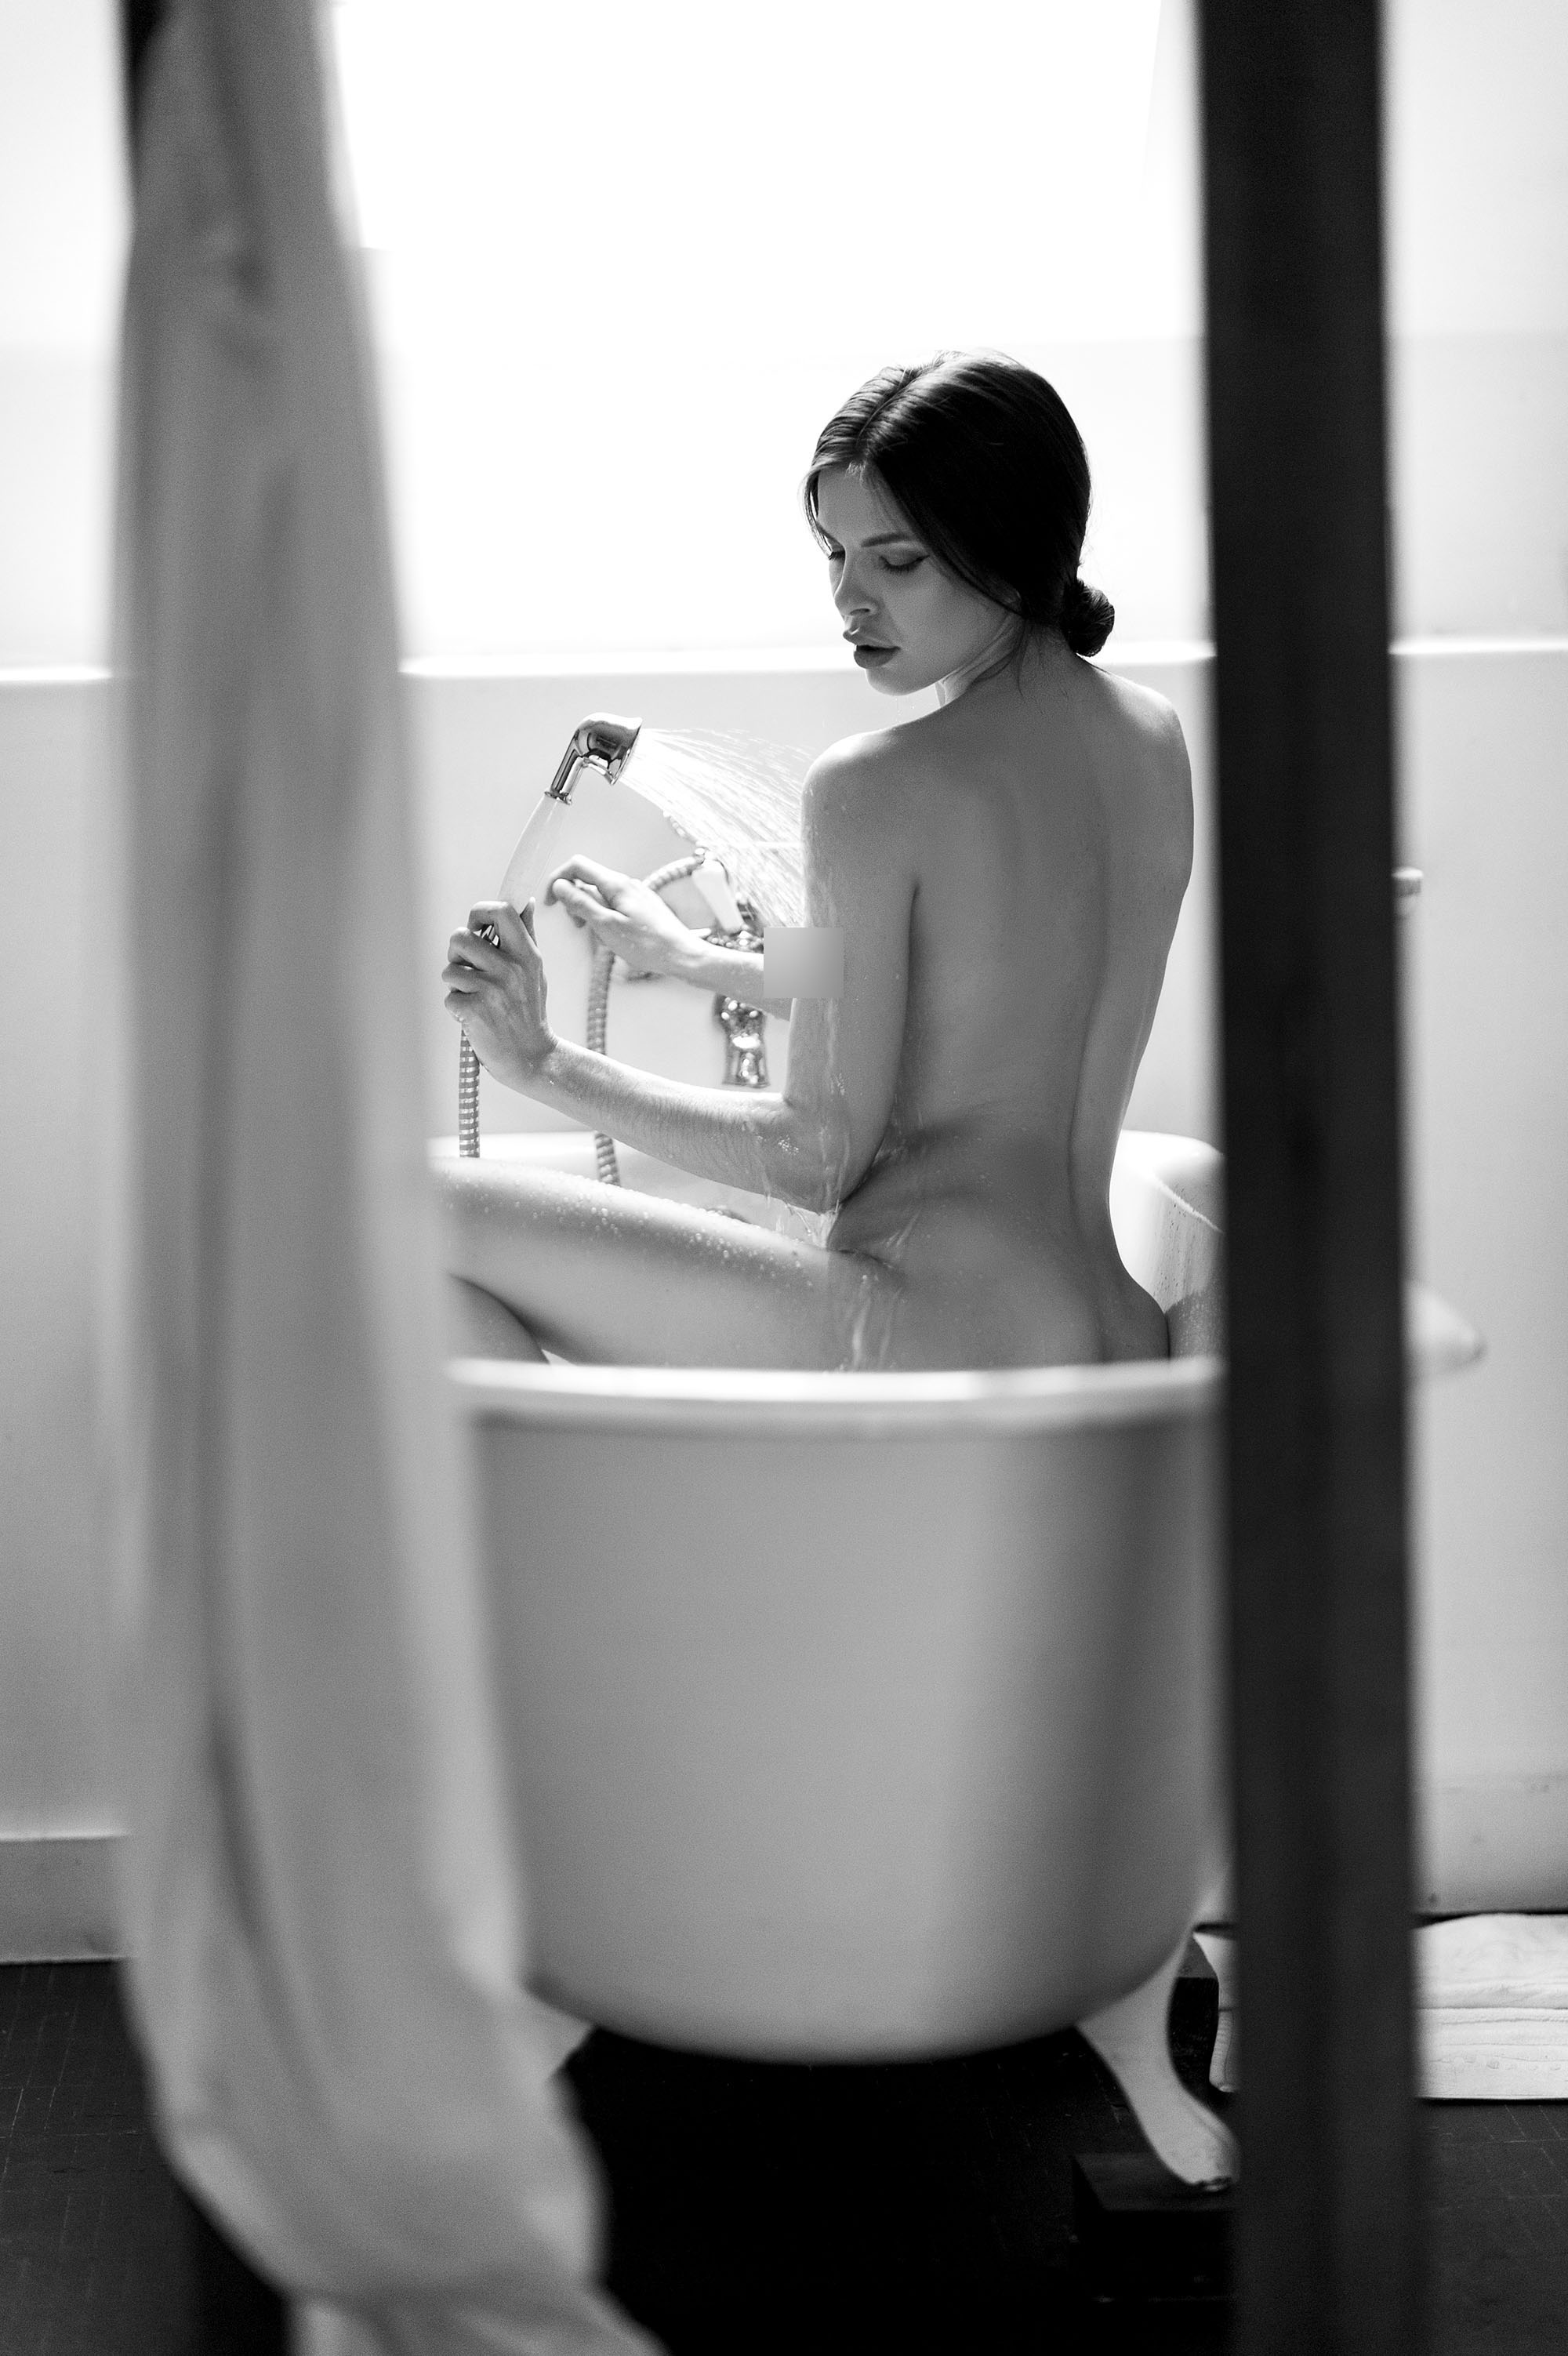 Viesta Borysova, model from Ukraine at a boudoir photoshoot